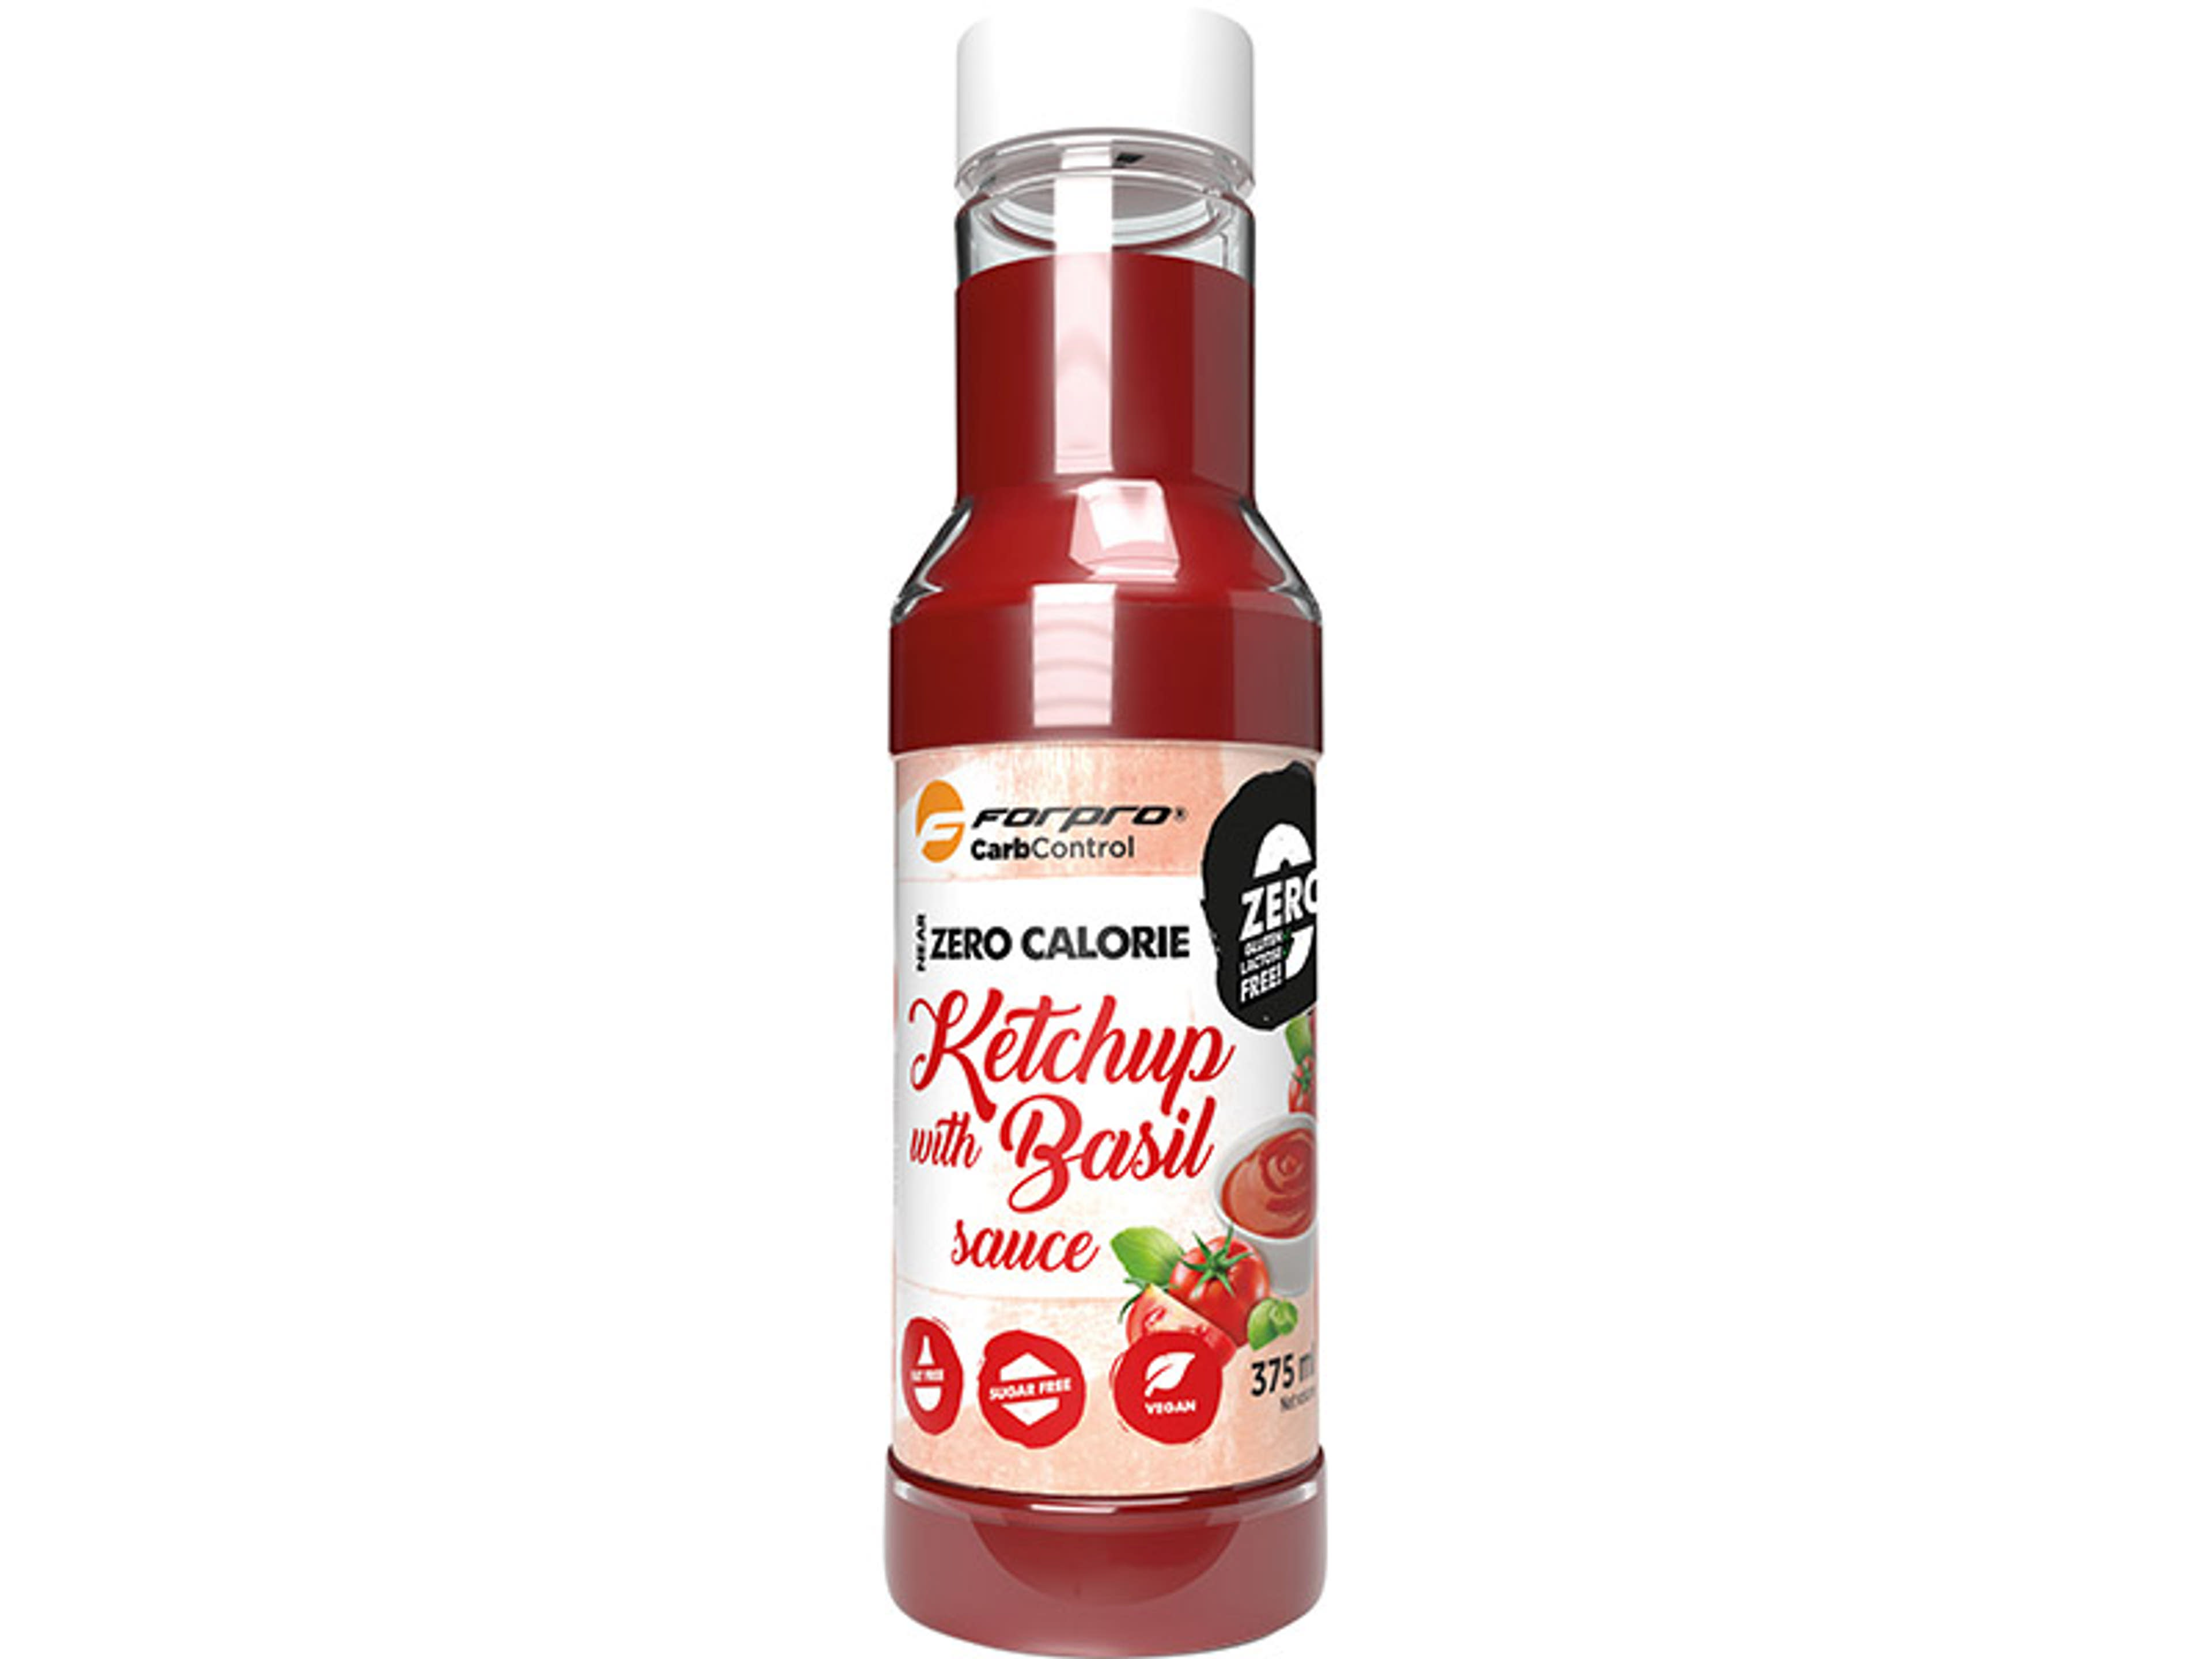 Forpro Carb Control Near Zero Calorie ketchup - 375 ml-1